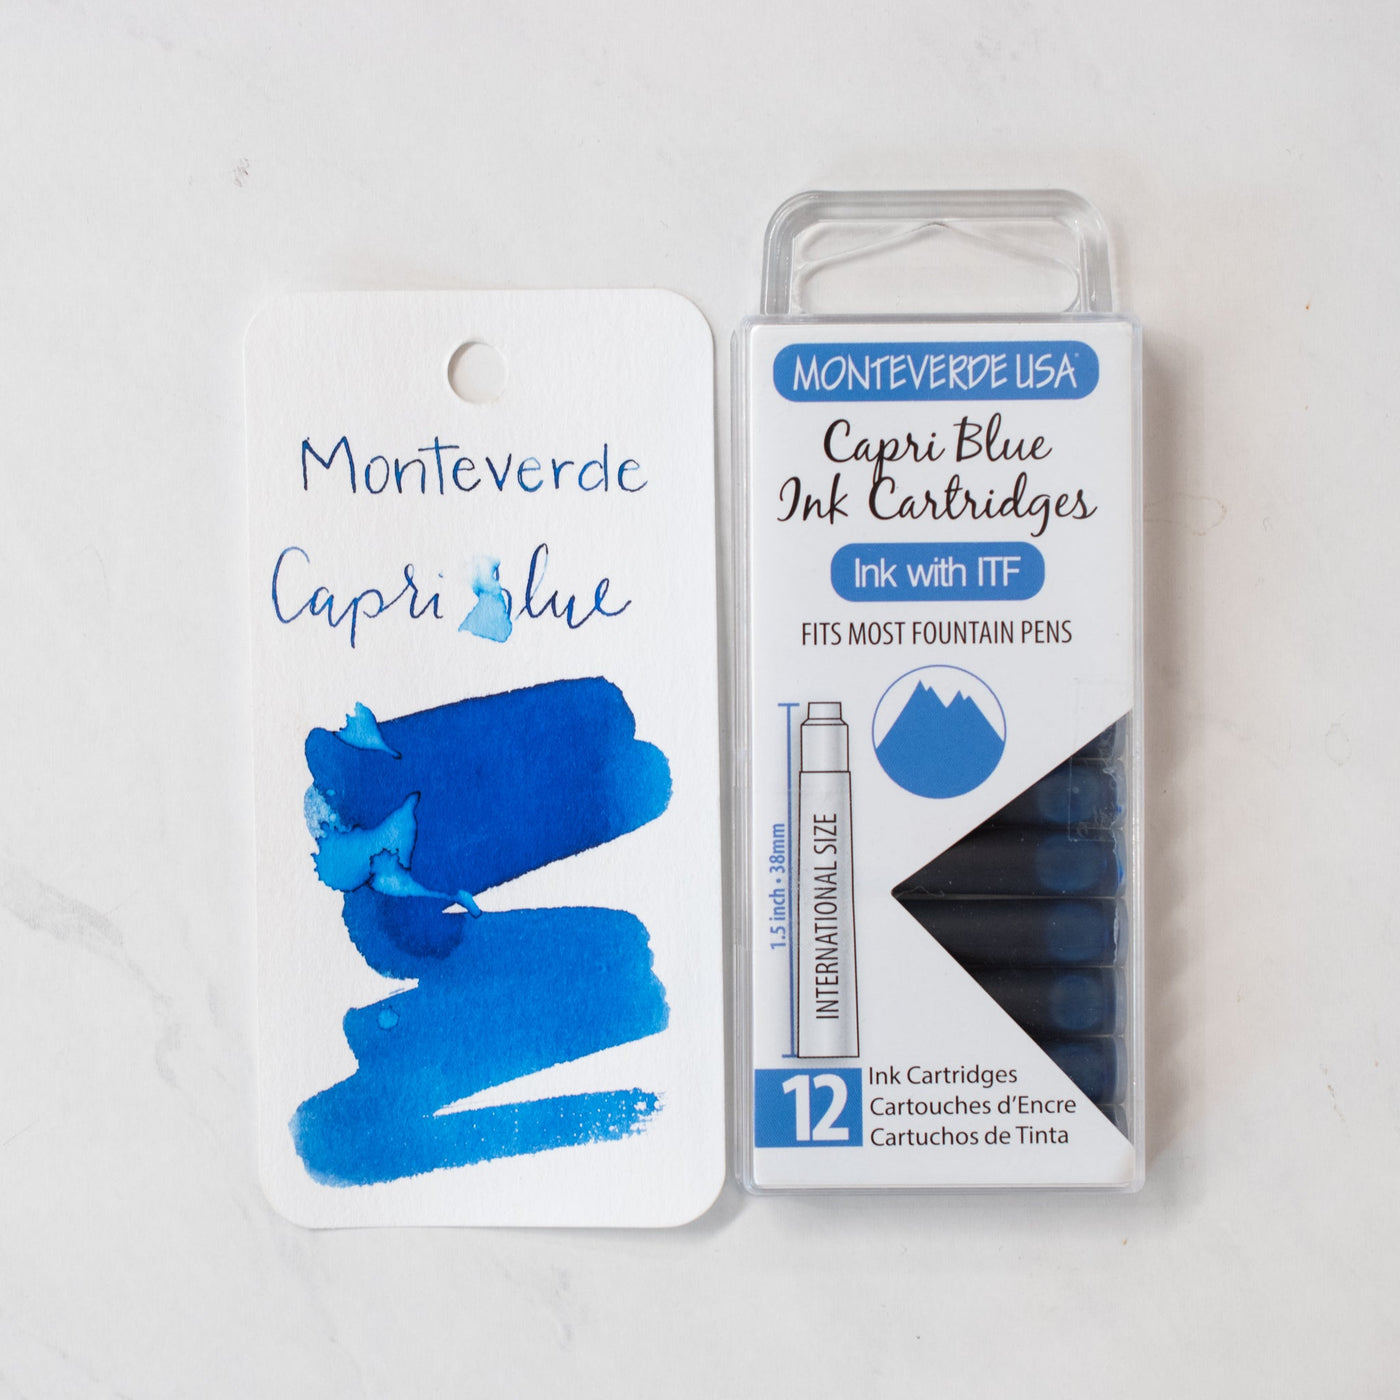 Monteverde Capri Blue Ink Cartridges